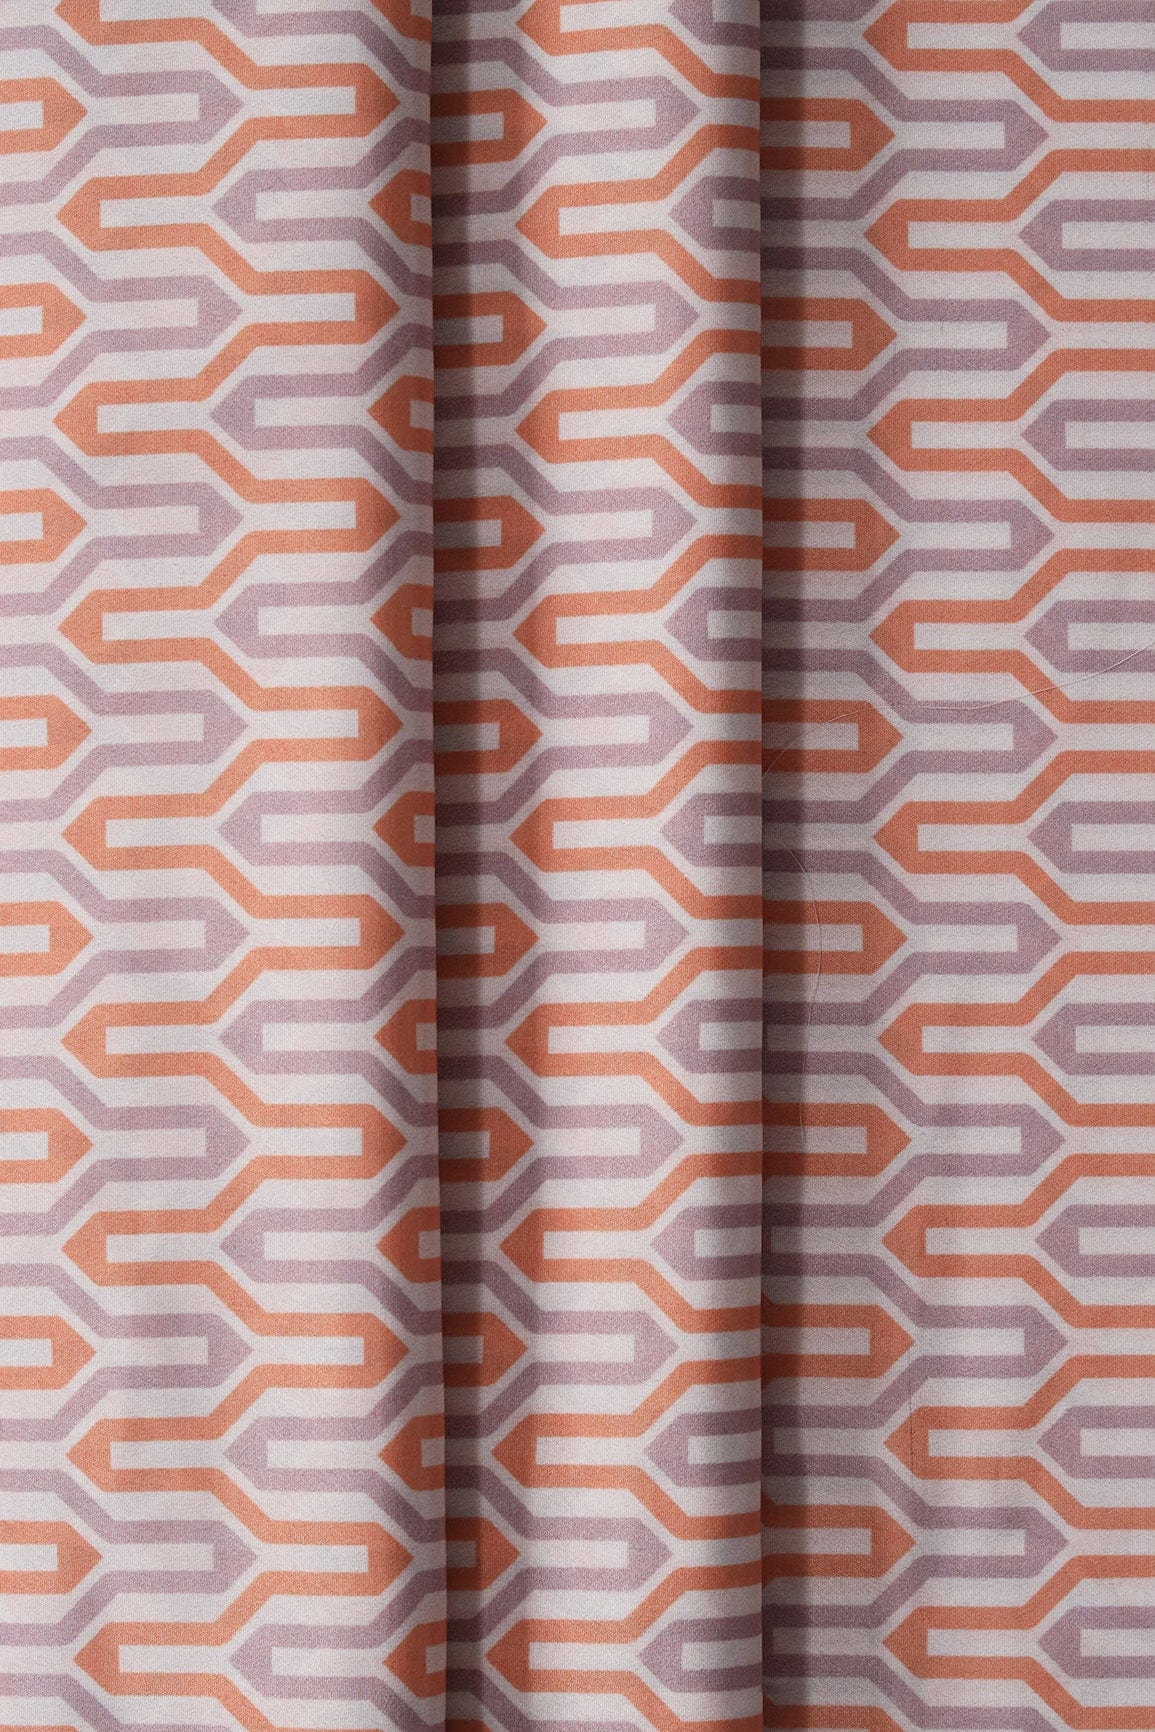 doeraa Prints Light Orange And Light Purple Geometric Pattern Digital Print On French Crepe Fabric